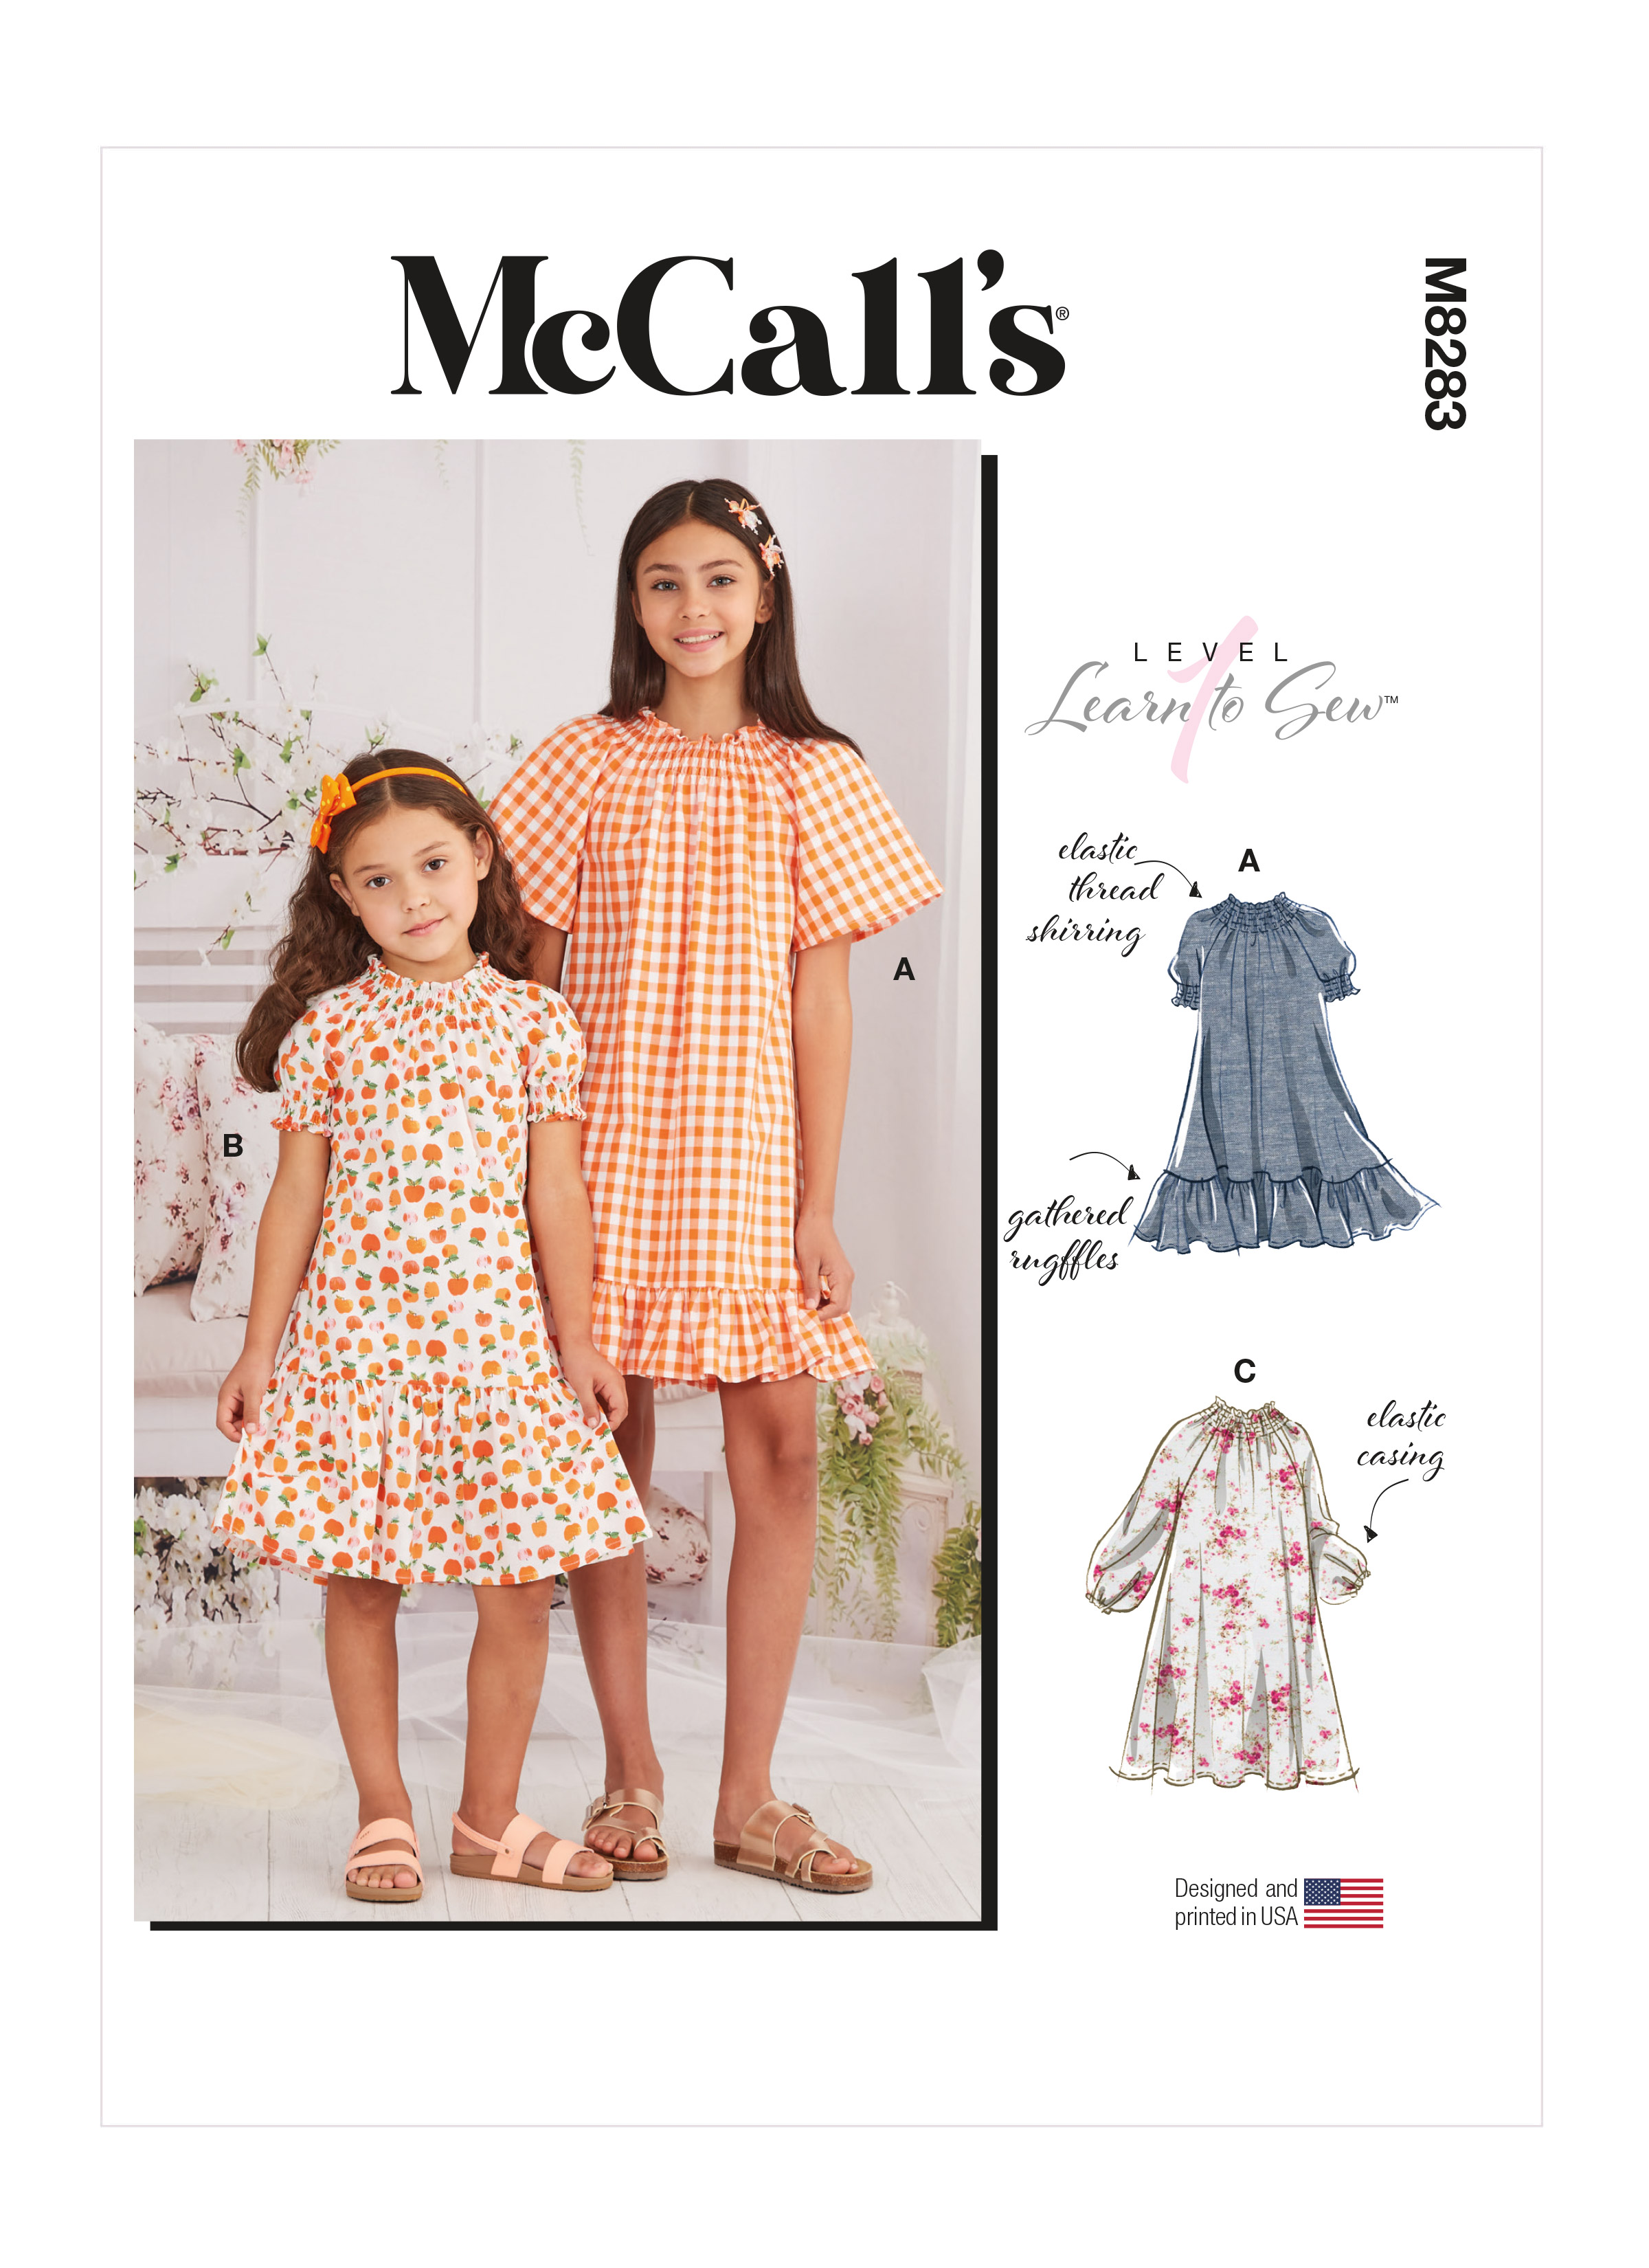 mccalls dress patterns